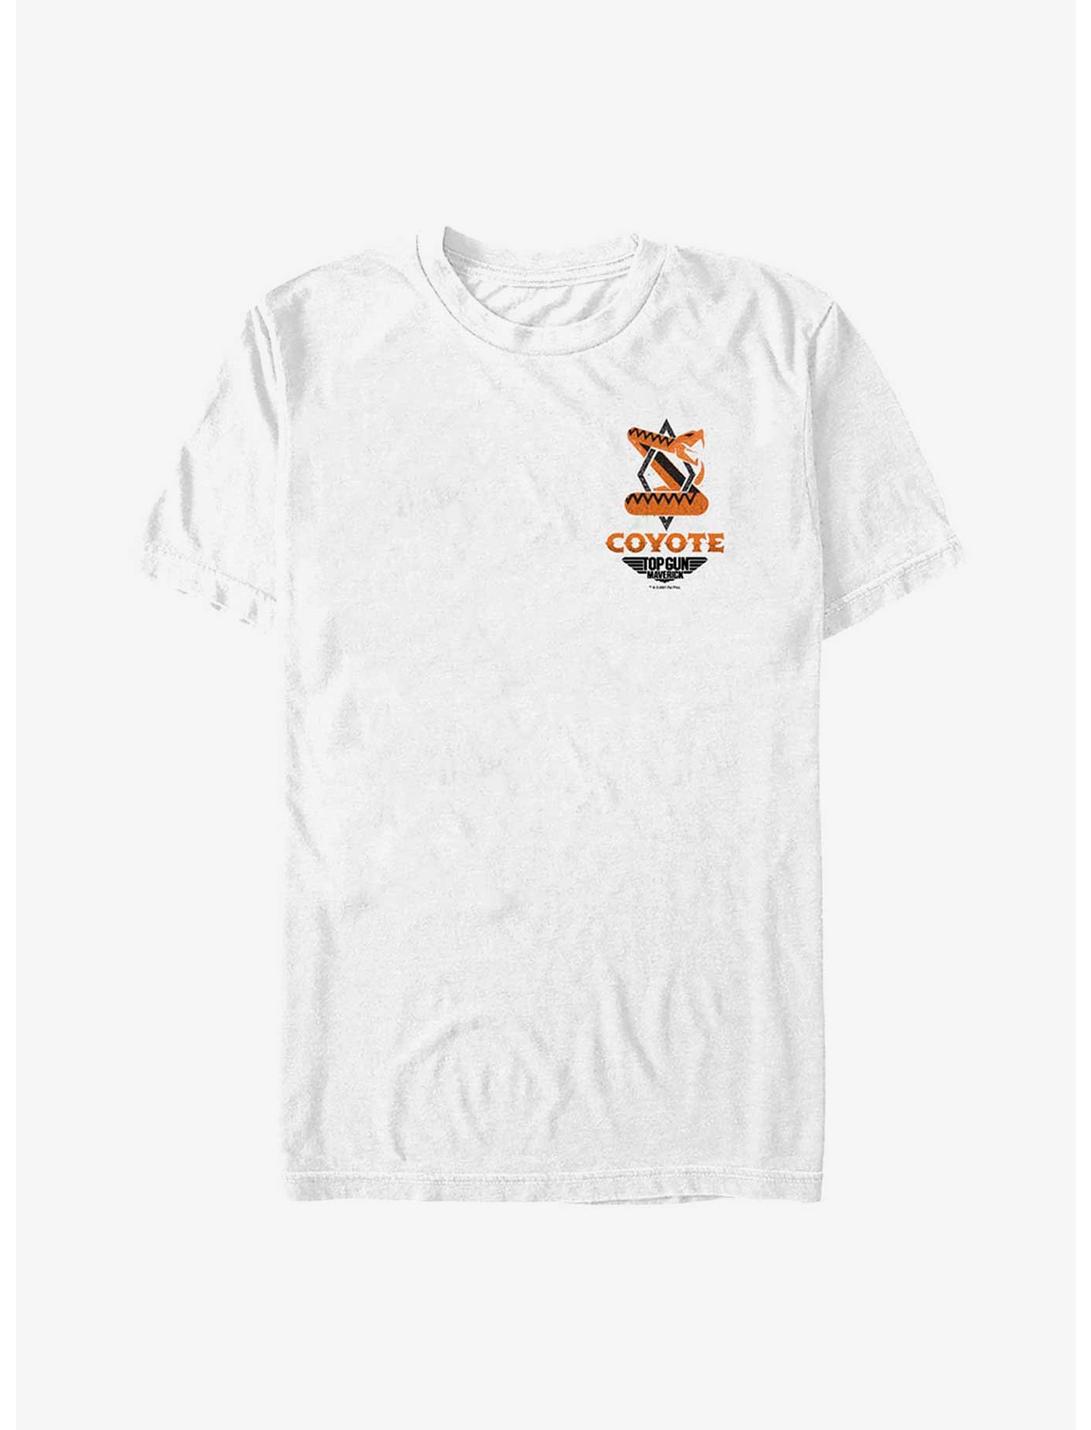 Top Gun Maverick Coyote Patch T-Shirt, WHITE, hi-res